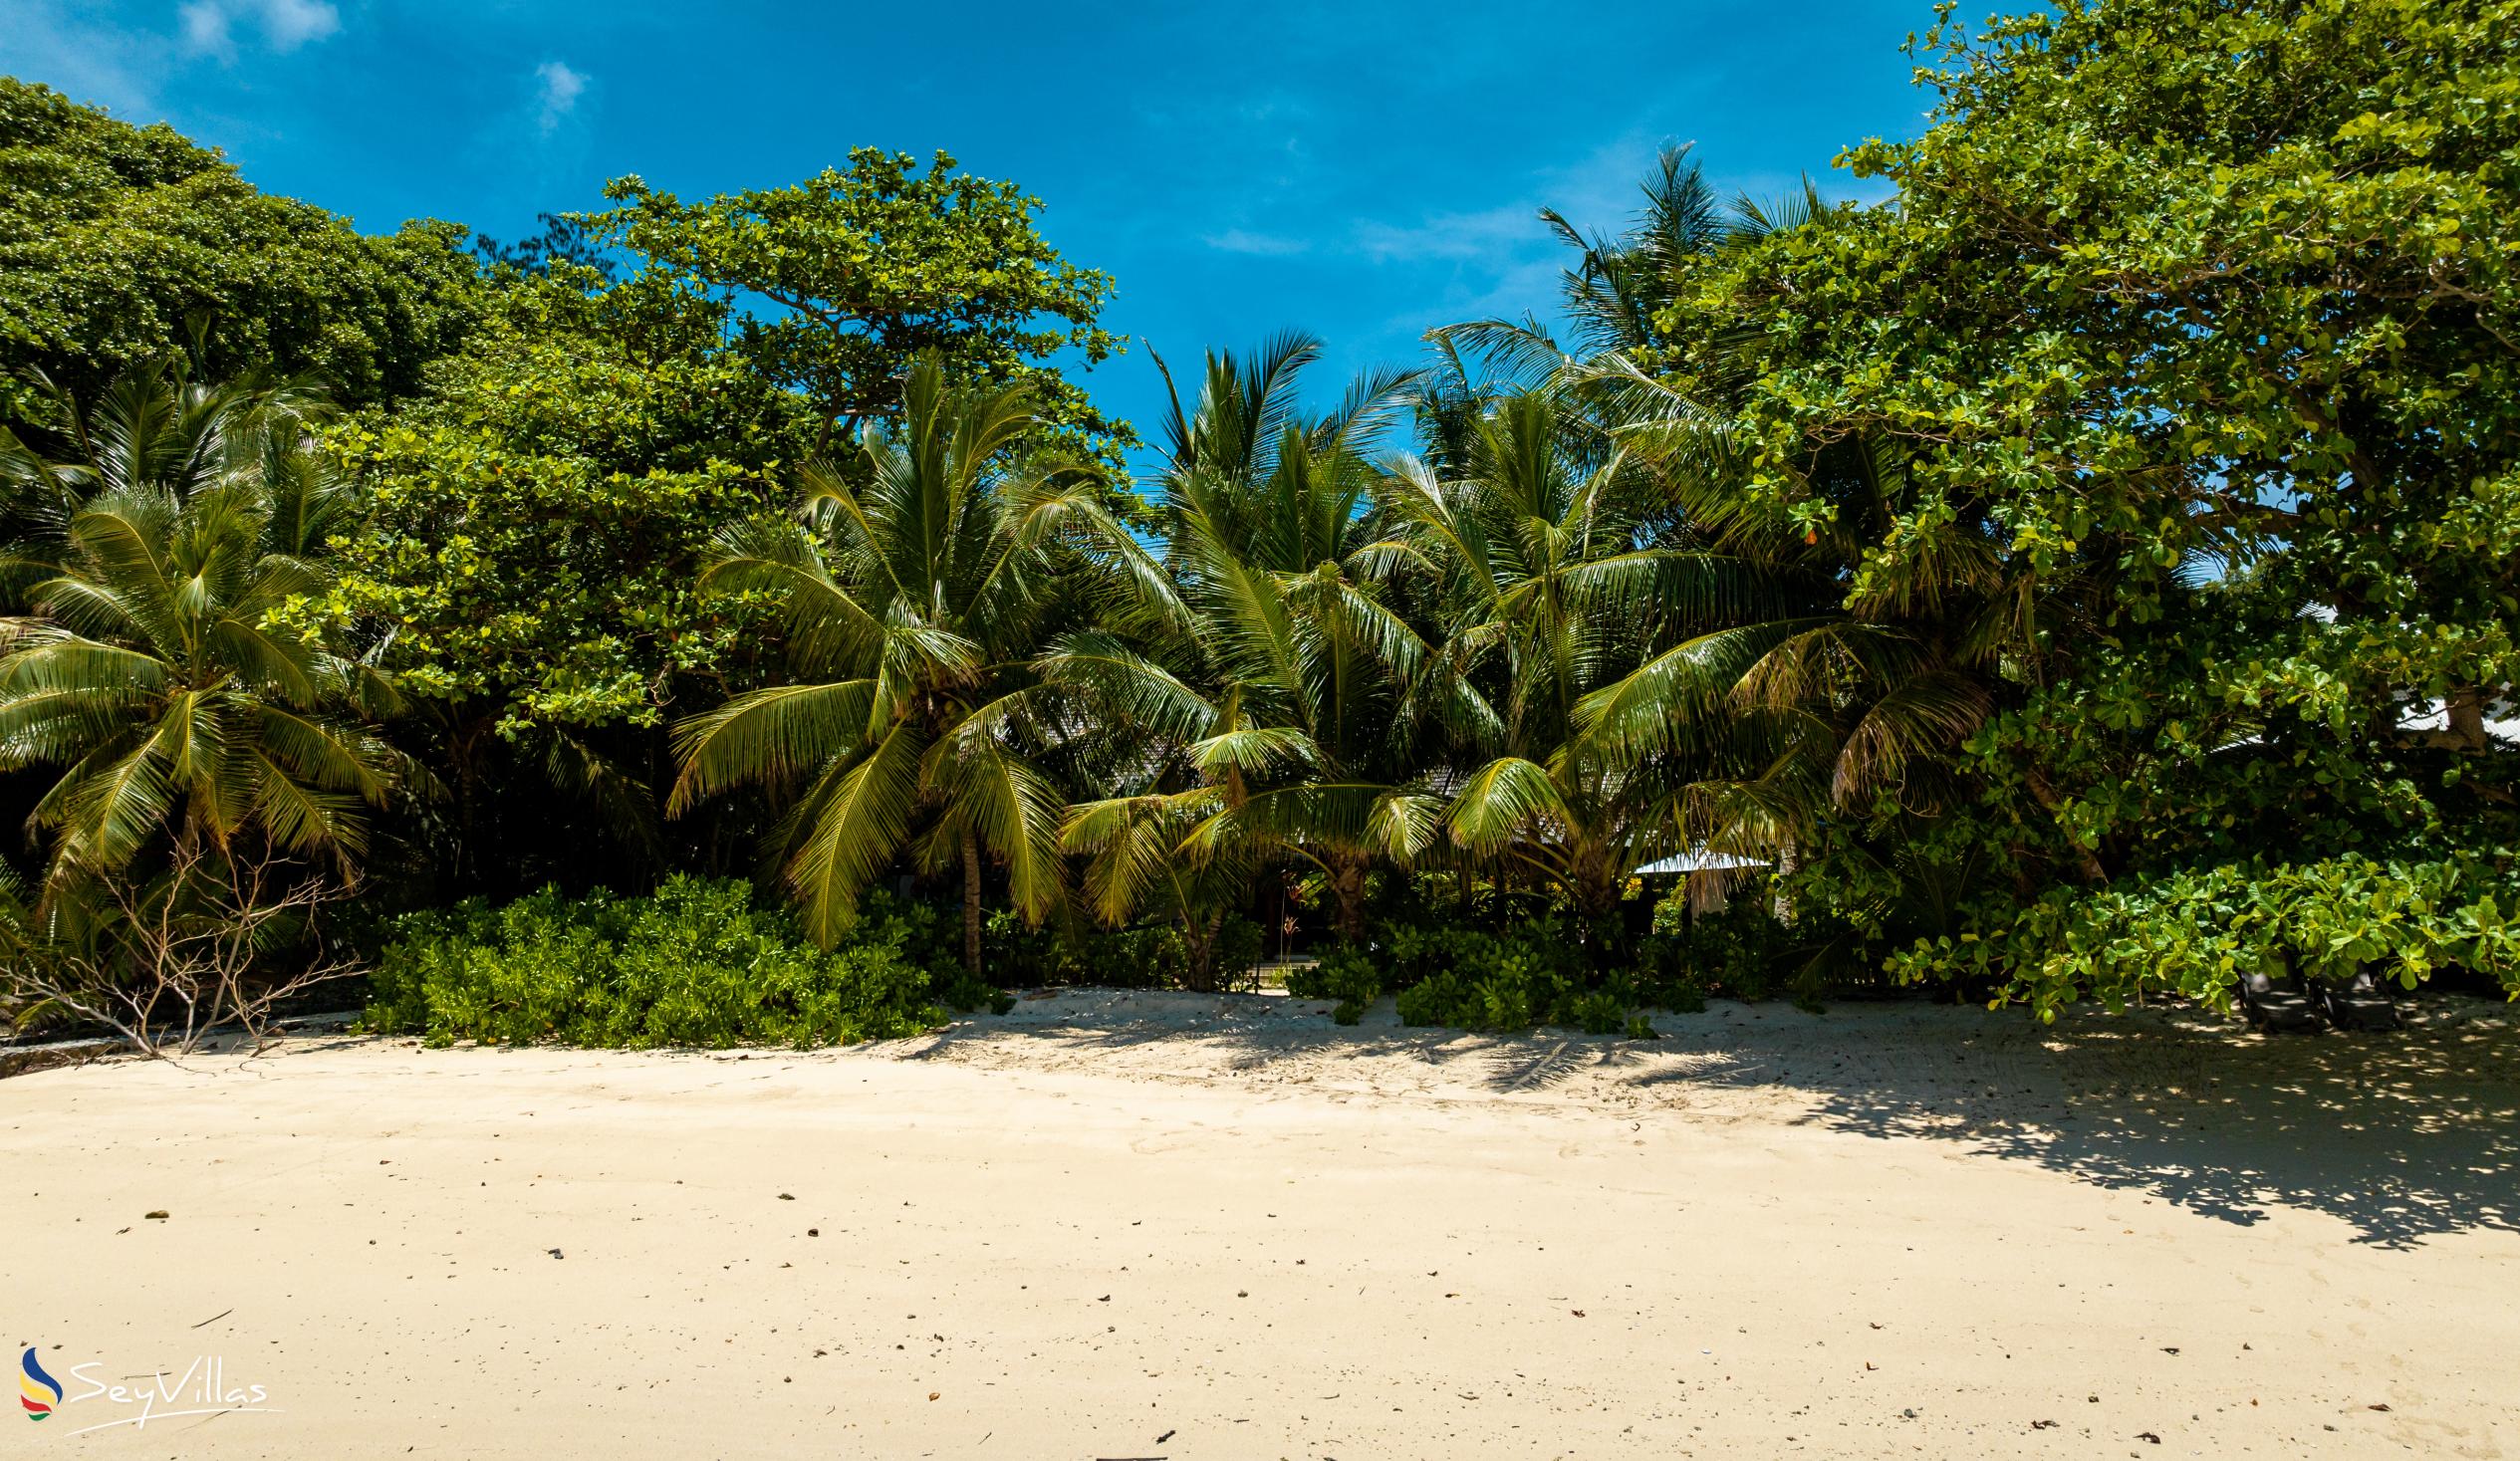 Photo 120: La Belle Tortue - Location - Silhouette Island (Seychelles)